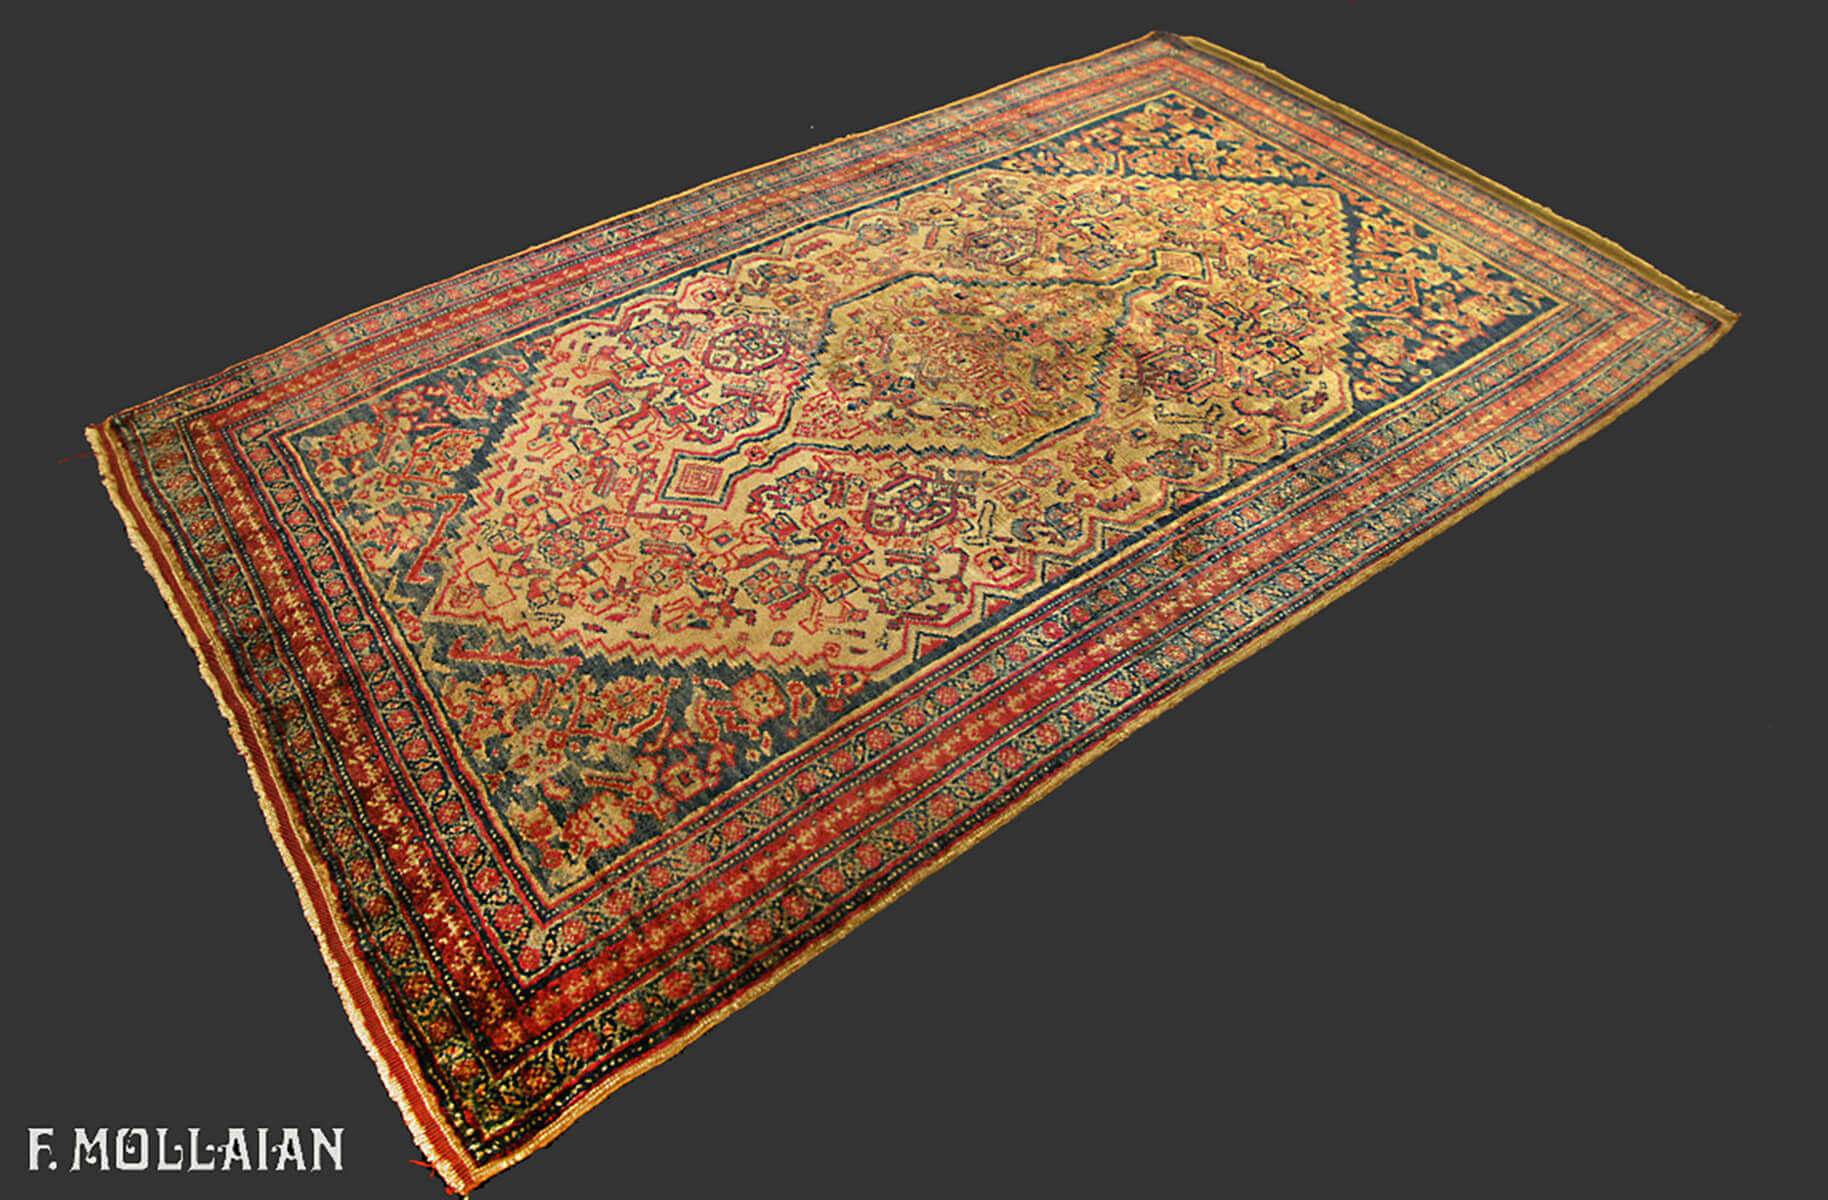 A Small Antique Persian Senneh Warp Silk Rug n°:22900830